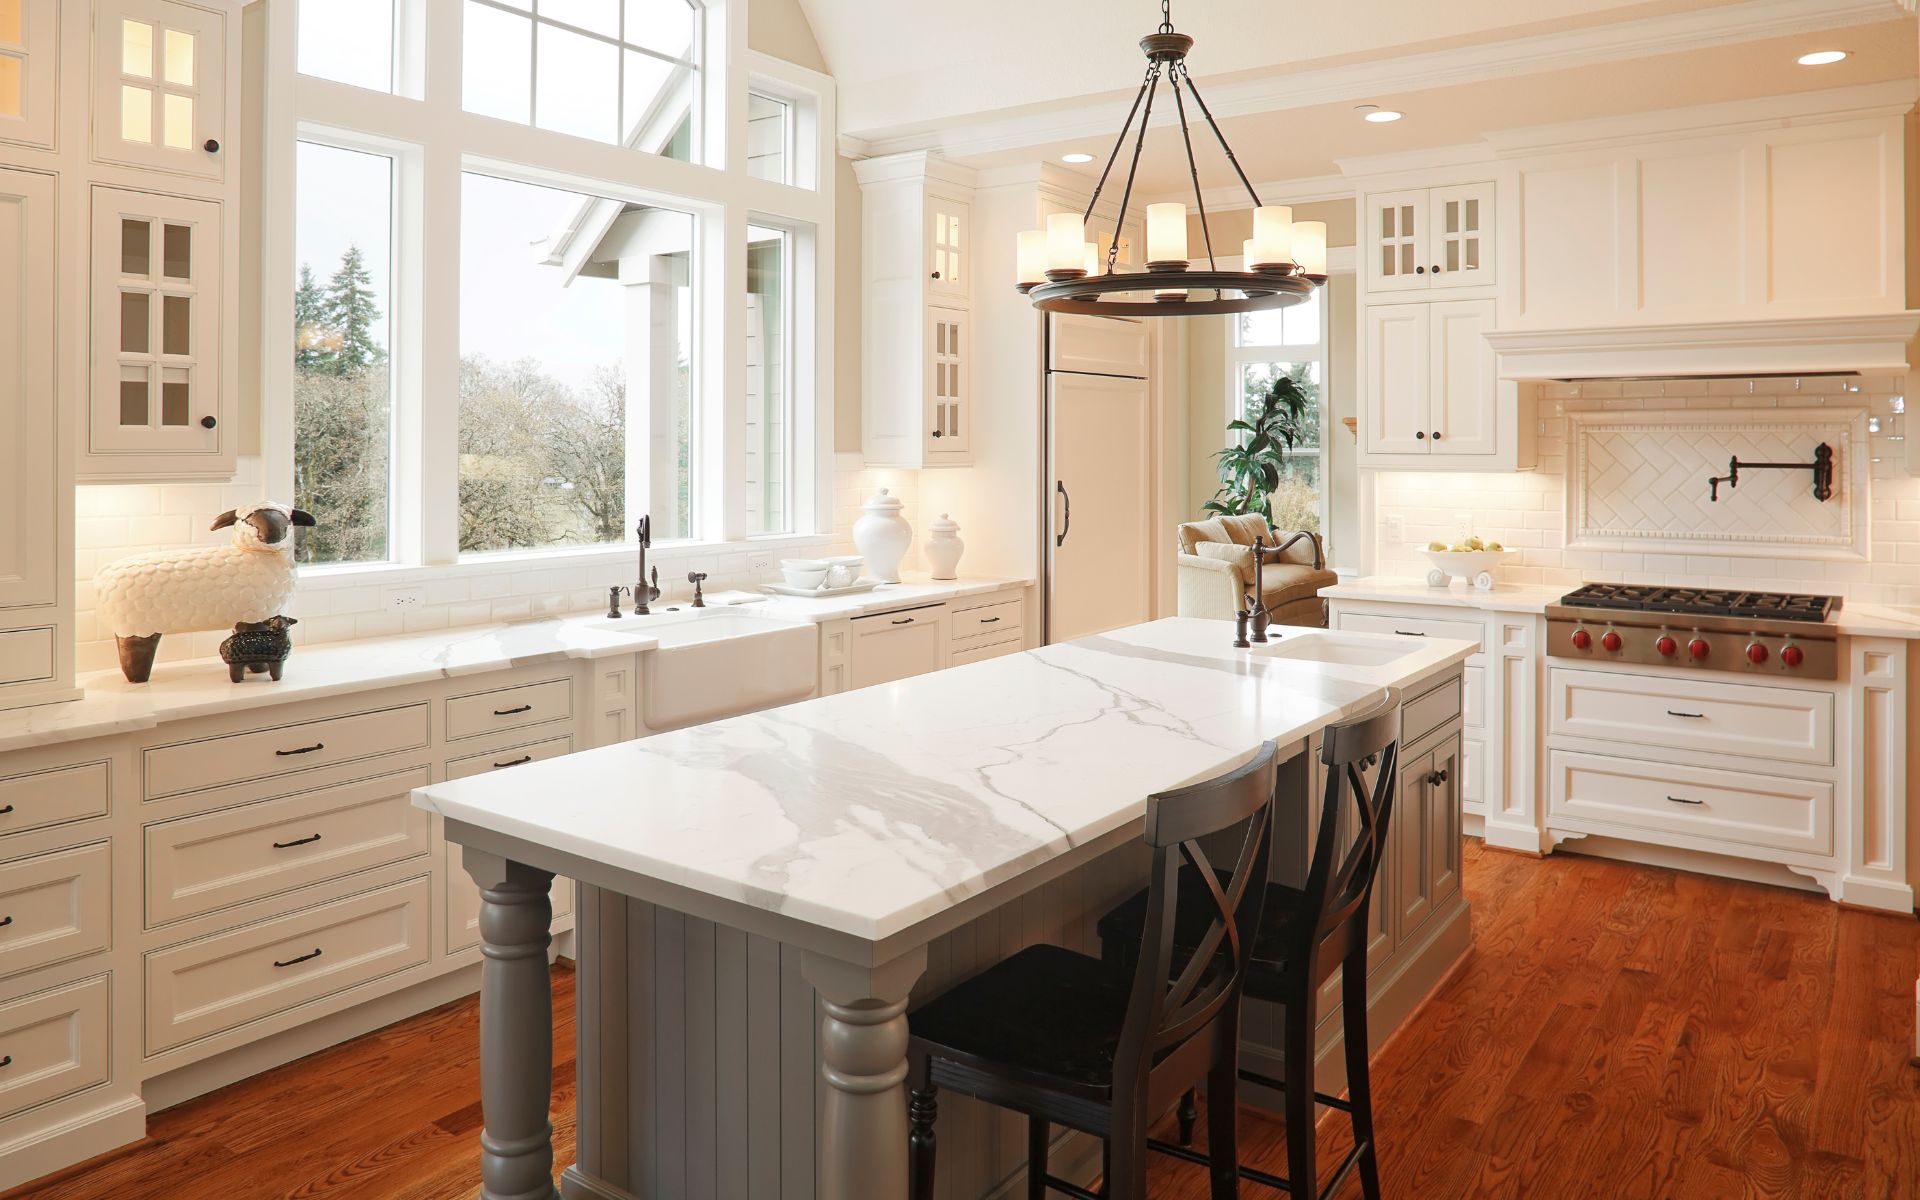 Elegant kitchen design with white countertops